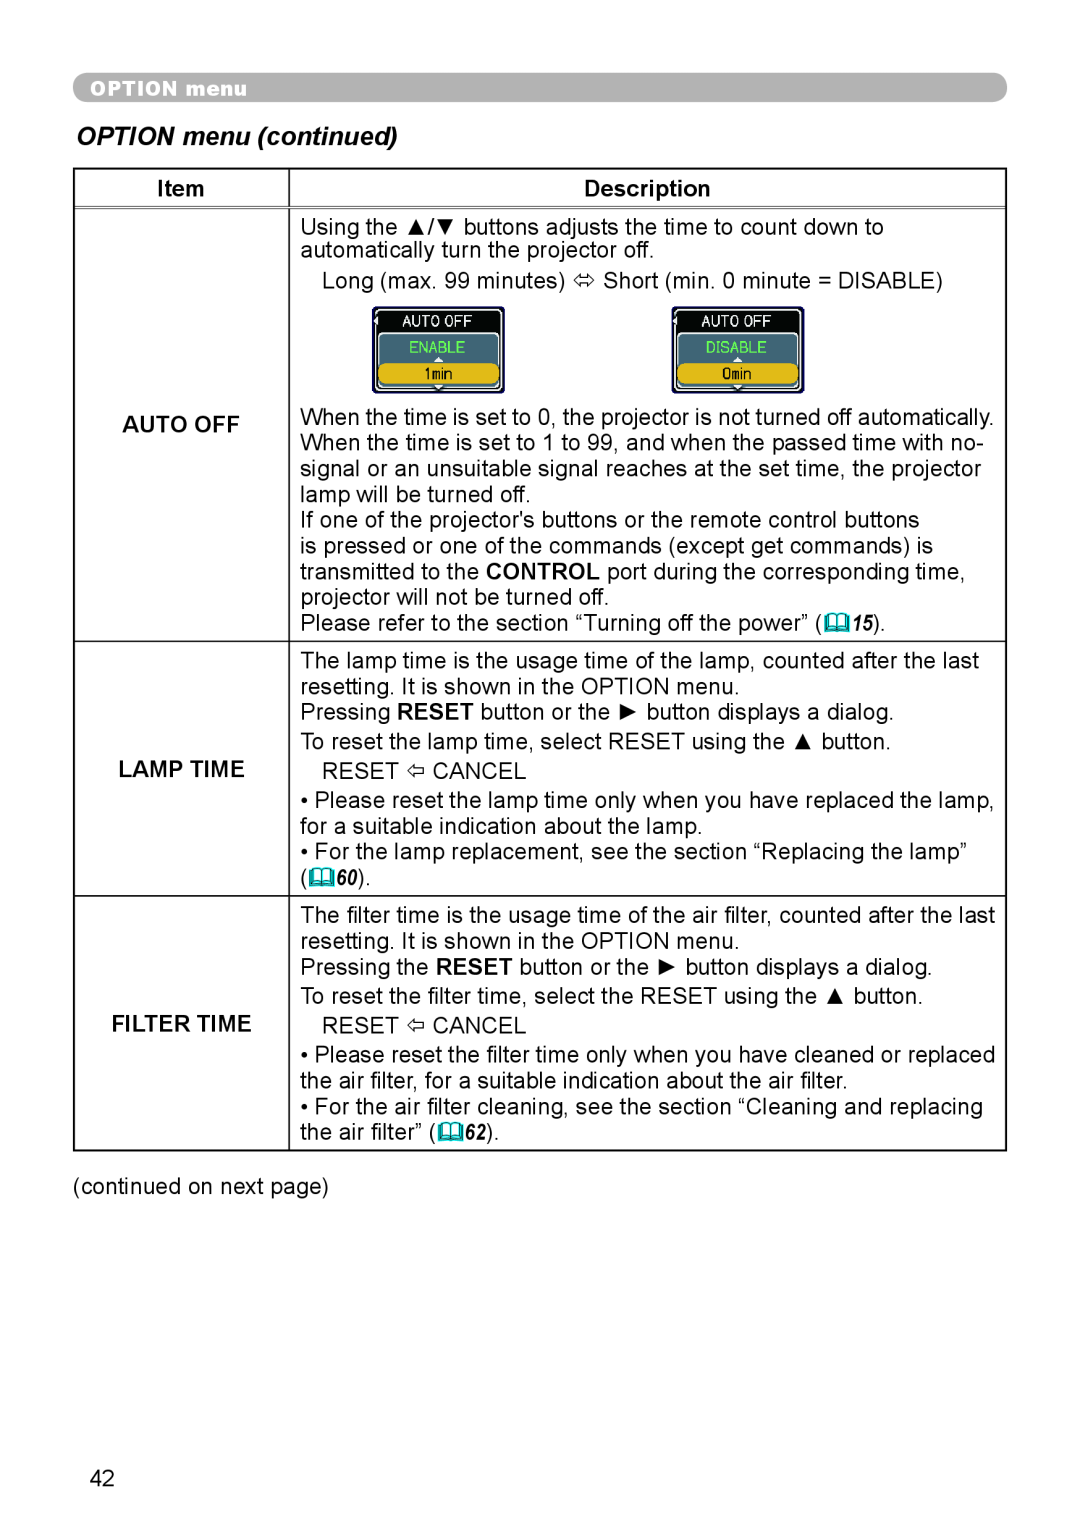 Hitachi CP-X206, CP-X306 user manual OPTION menu continued, Description, Auto Off, Lamp Time, Filter Time 